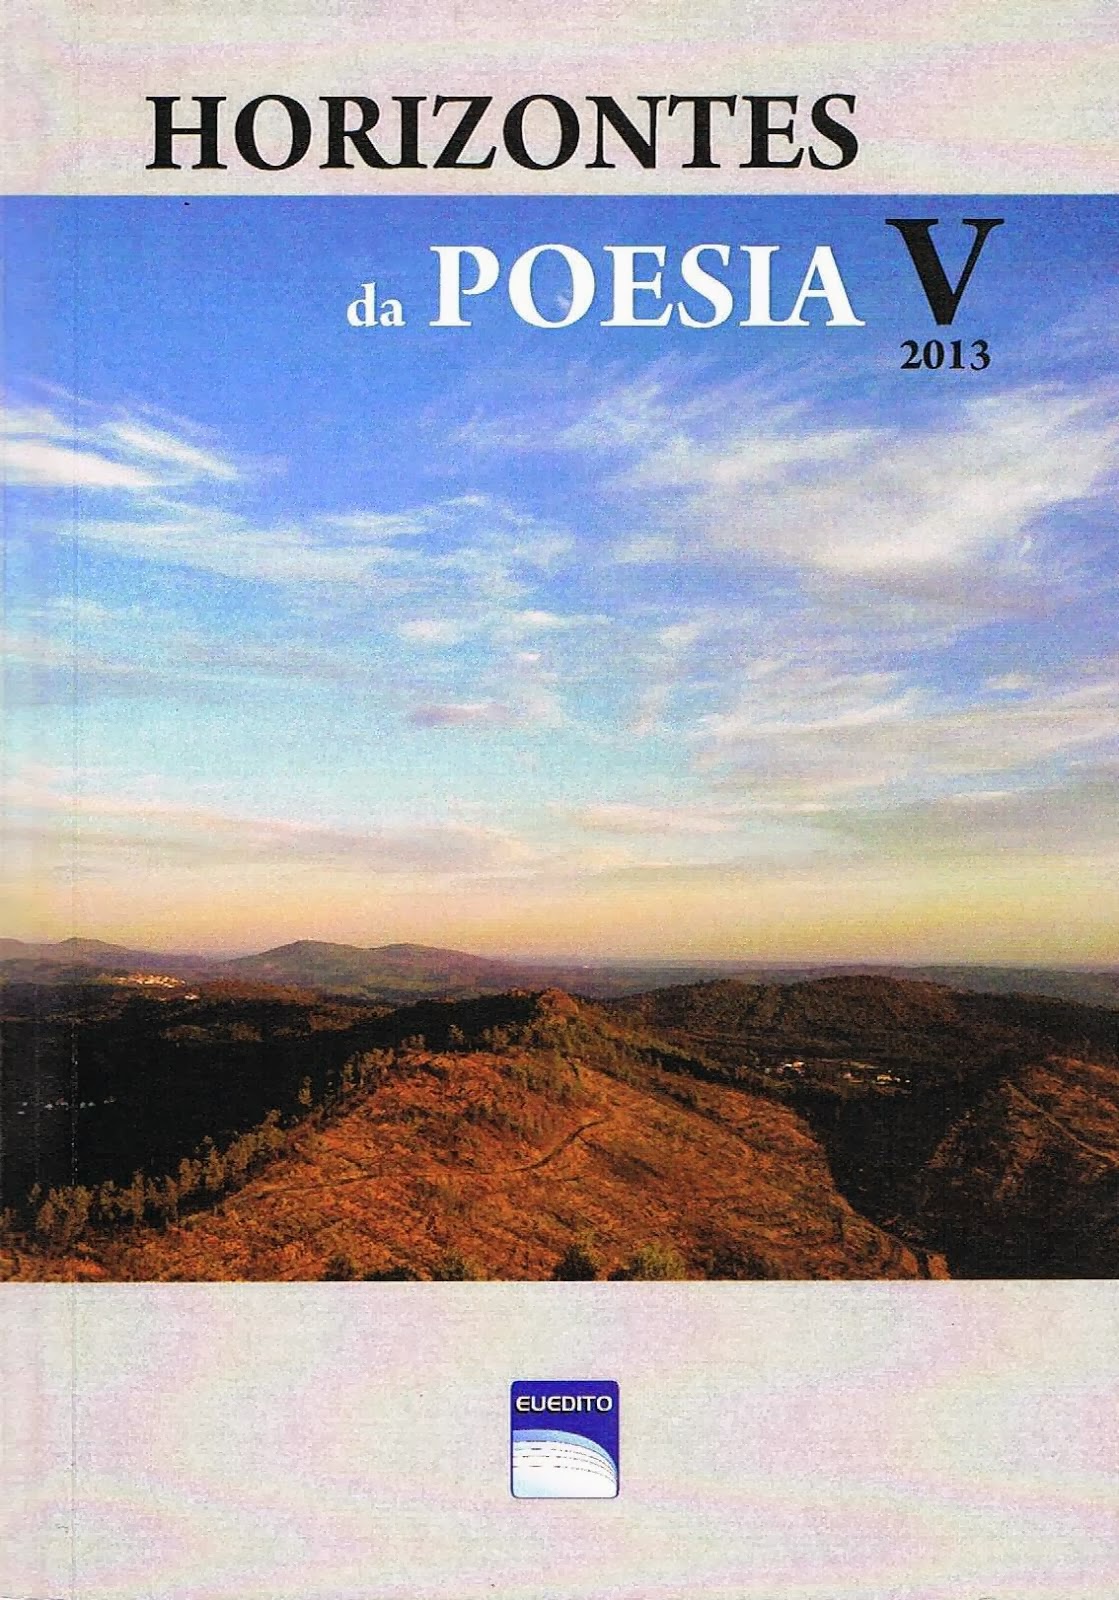 "Horizontes da Poesia V" - 2013